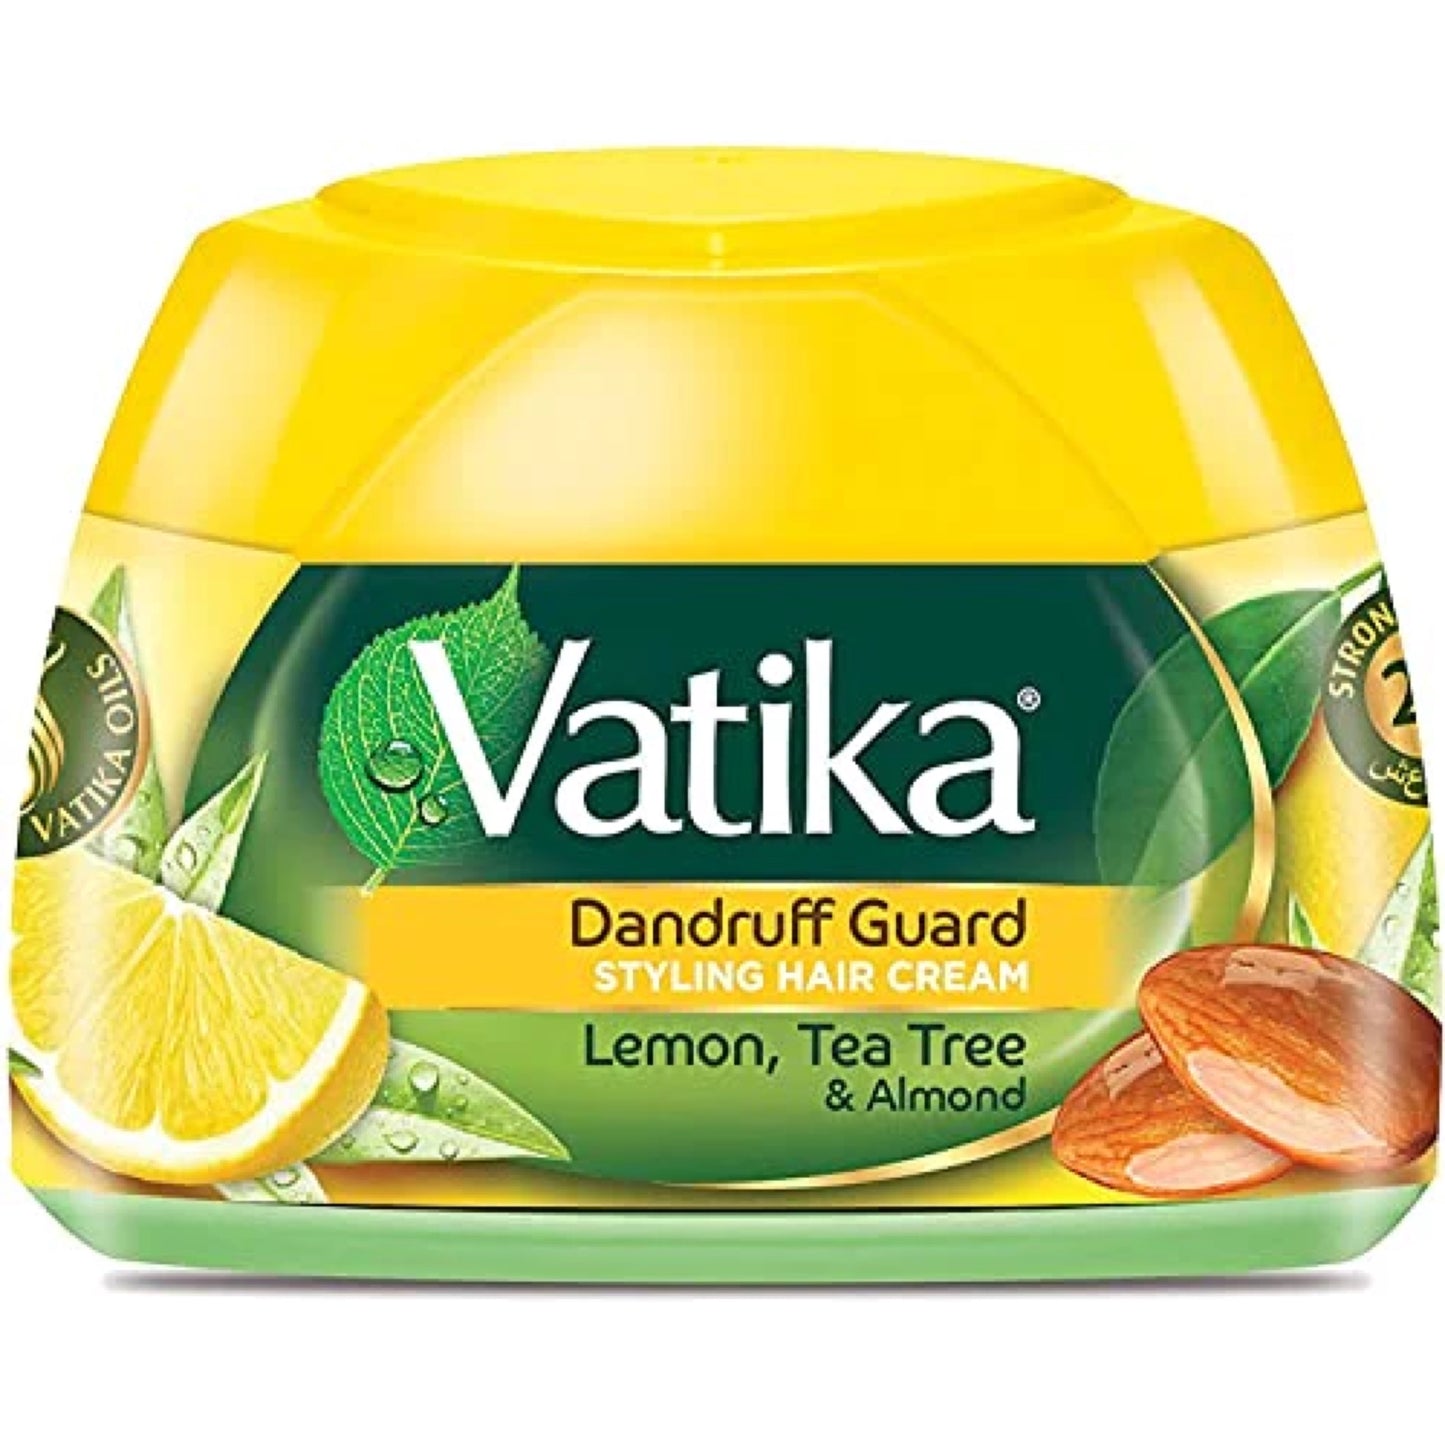 Dabur Vatika Hair Styling Cream - Dandruff Guard - 140ML